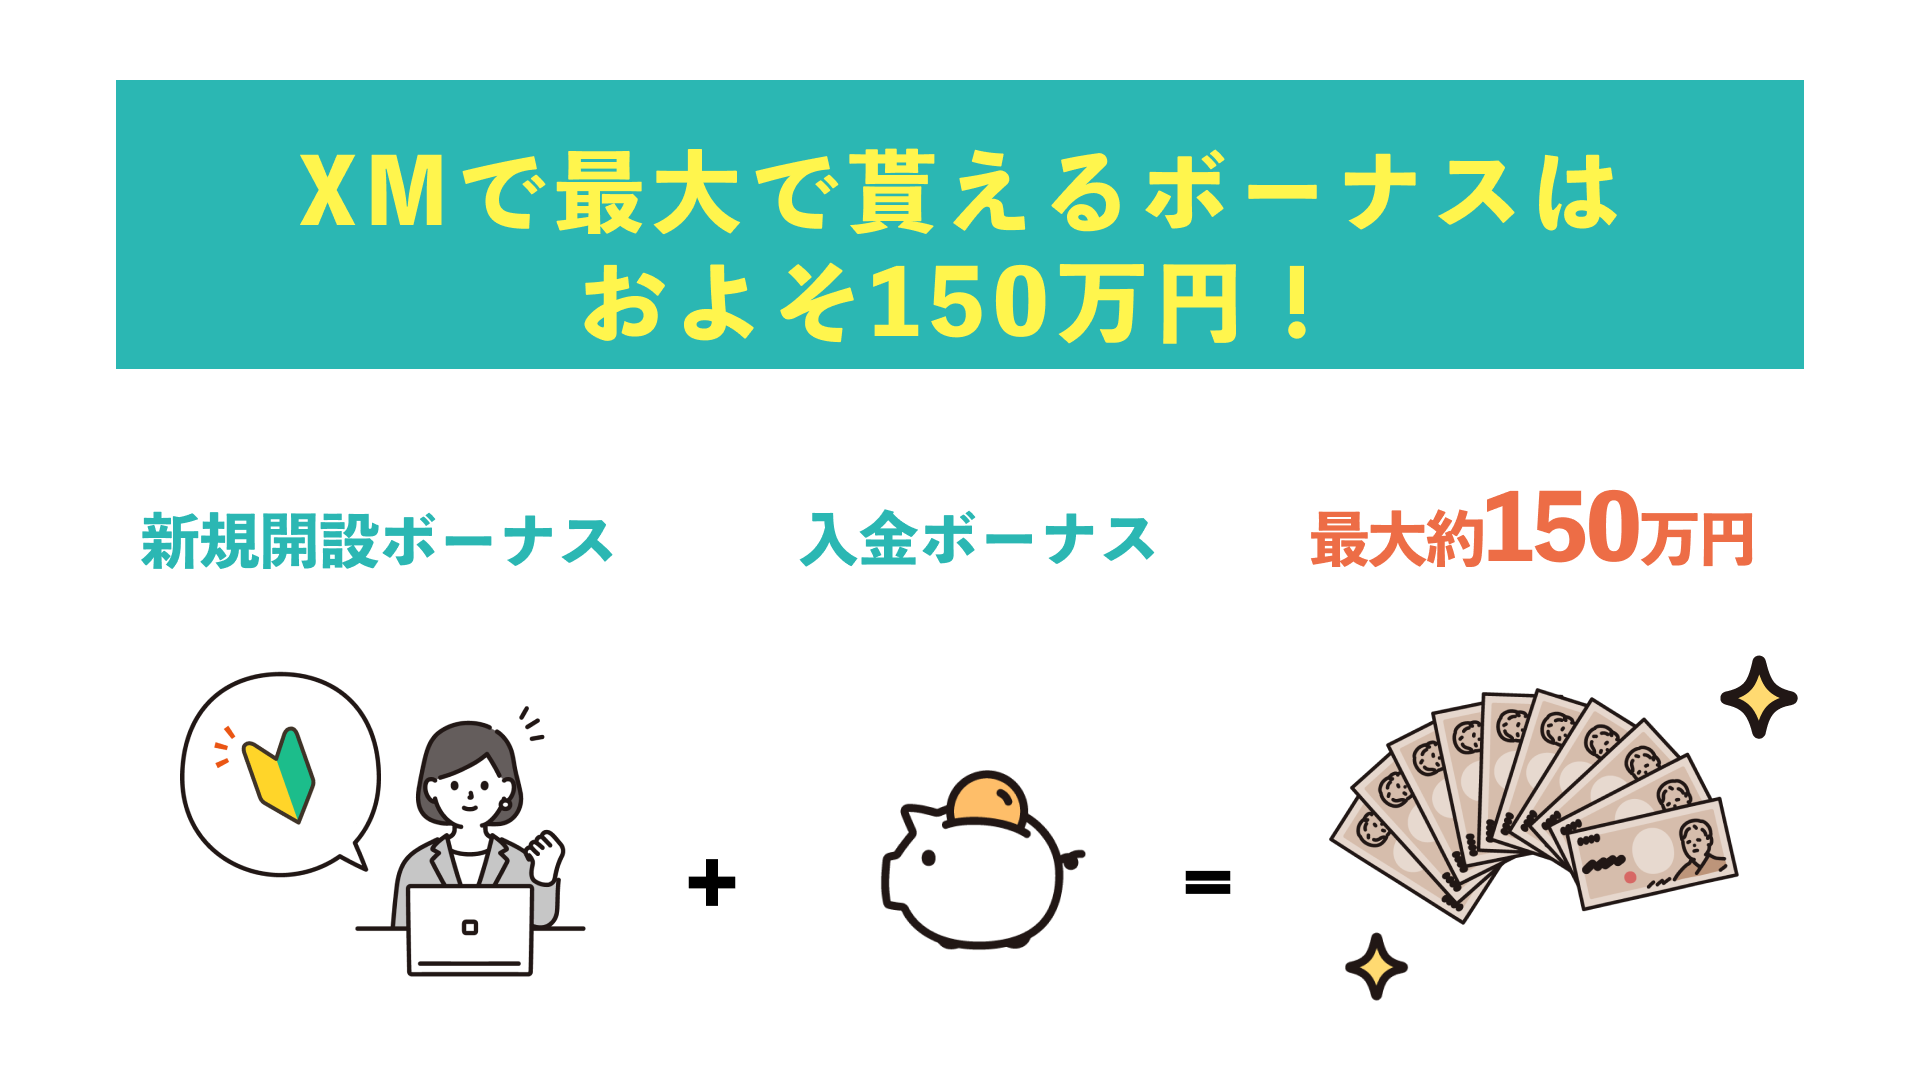 XMで最大で貰えるボーナスはおよそ150万円！